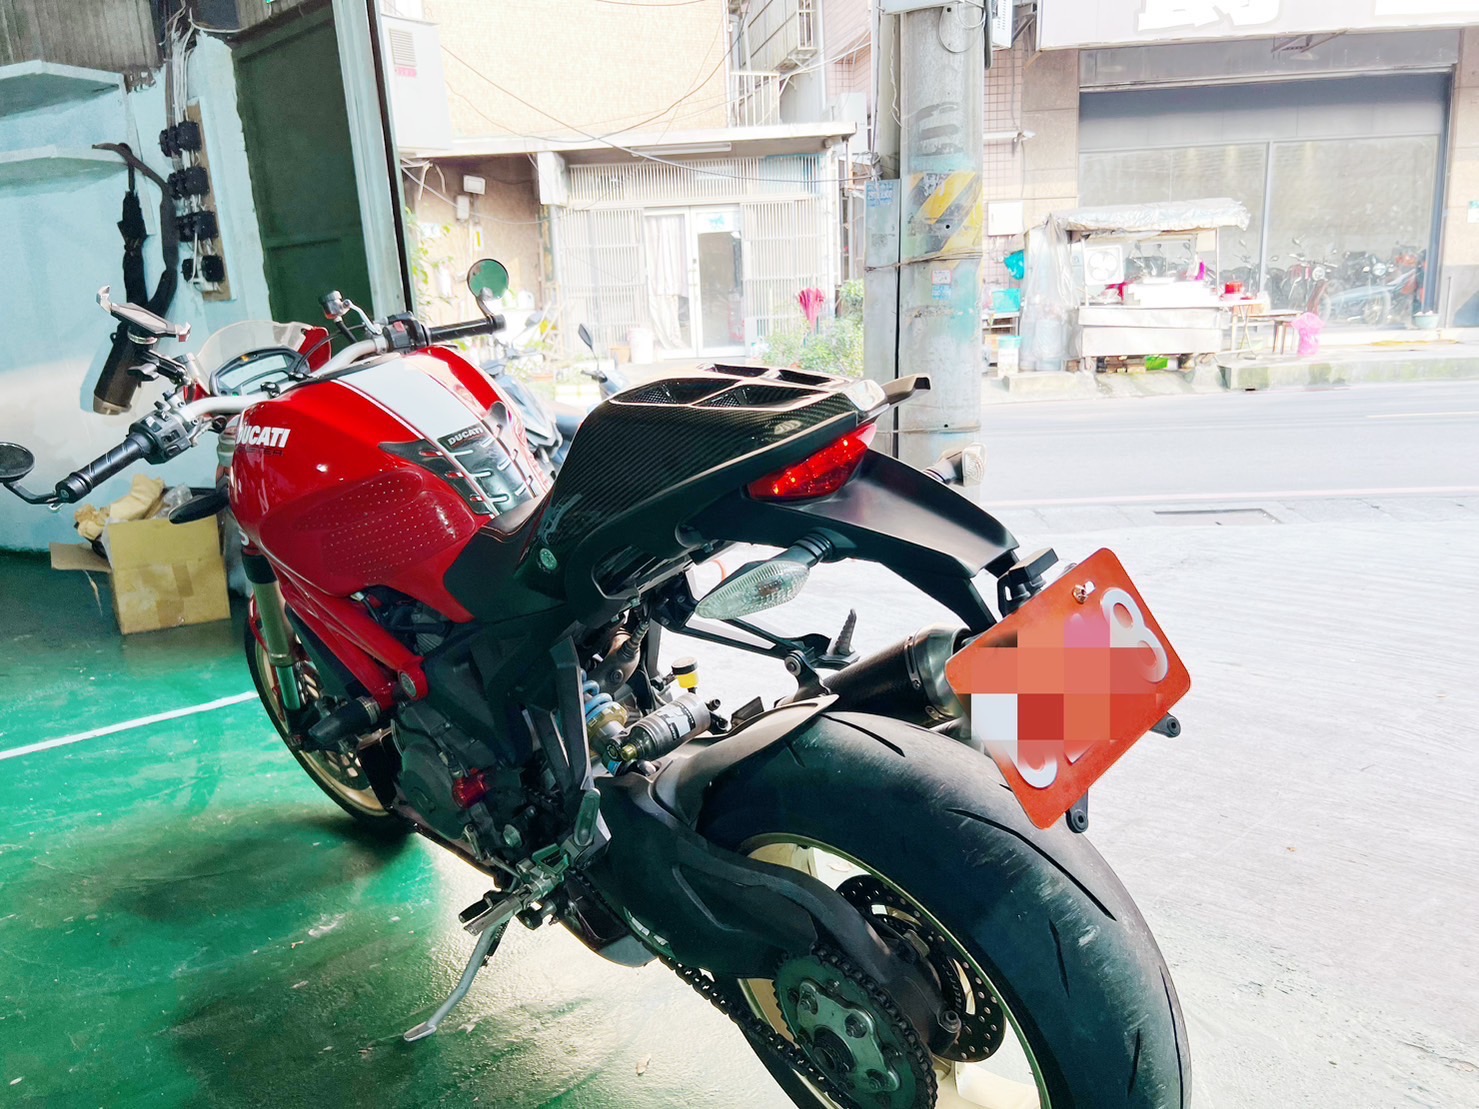 DUCATI MONSTER1100 - 中古/二手車出售中 Ducati Monster 1100 evo 可分期 可換車 歡迎詢問 line:@q0984380388 | 個人自售